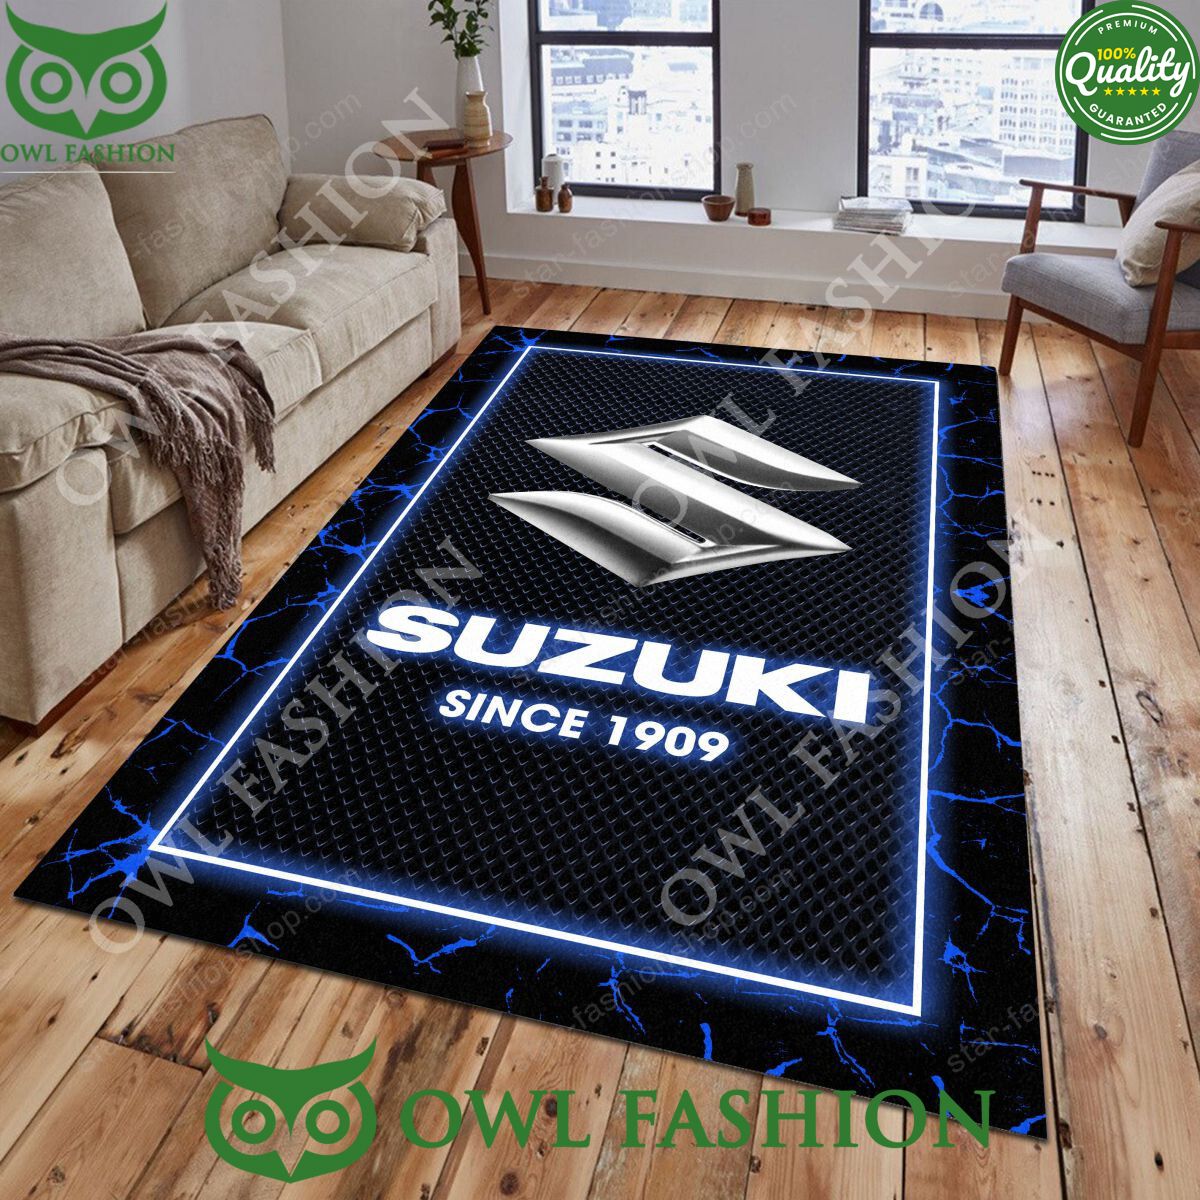 motorcycle brand suzuki trending design carpet rug 1 TnF3z.jpg